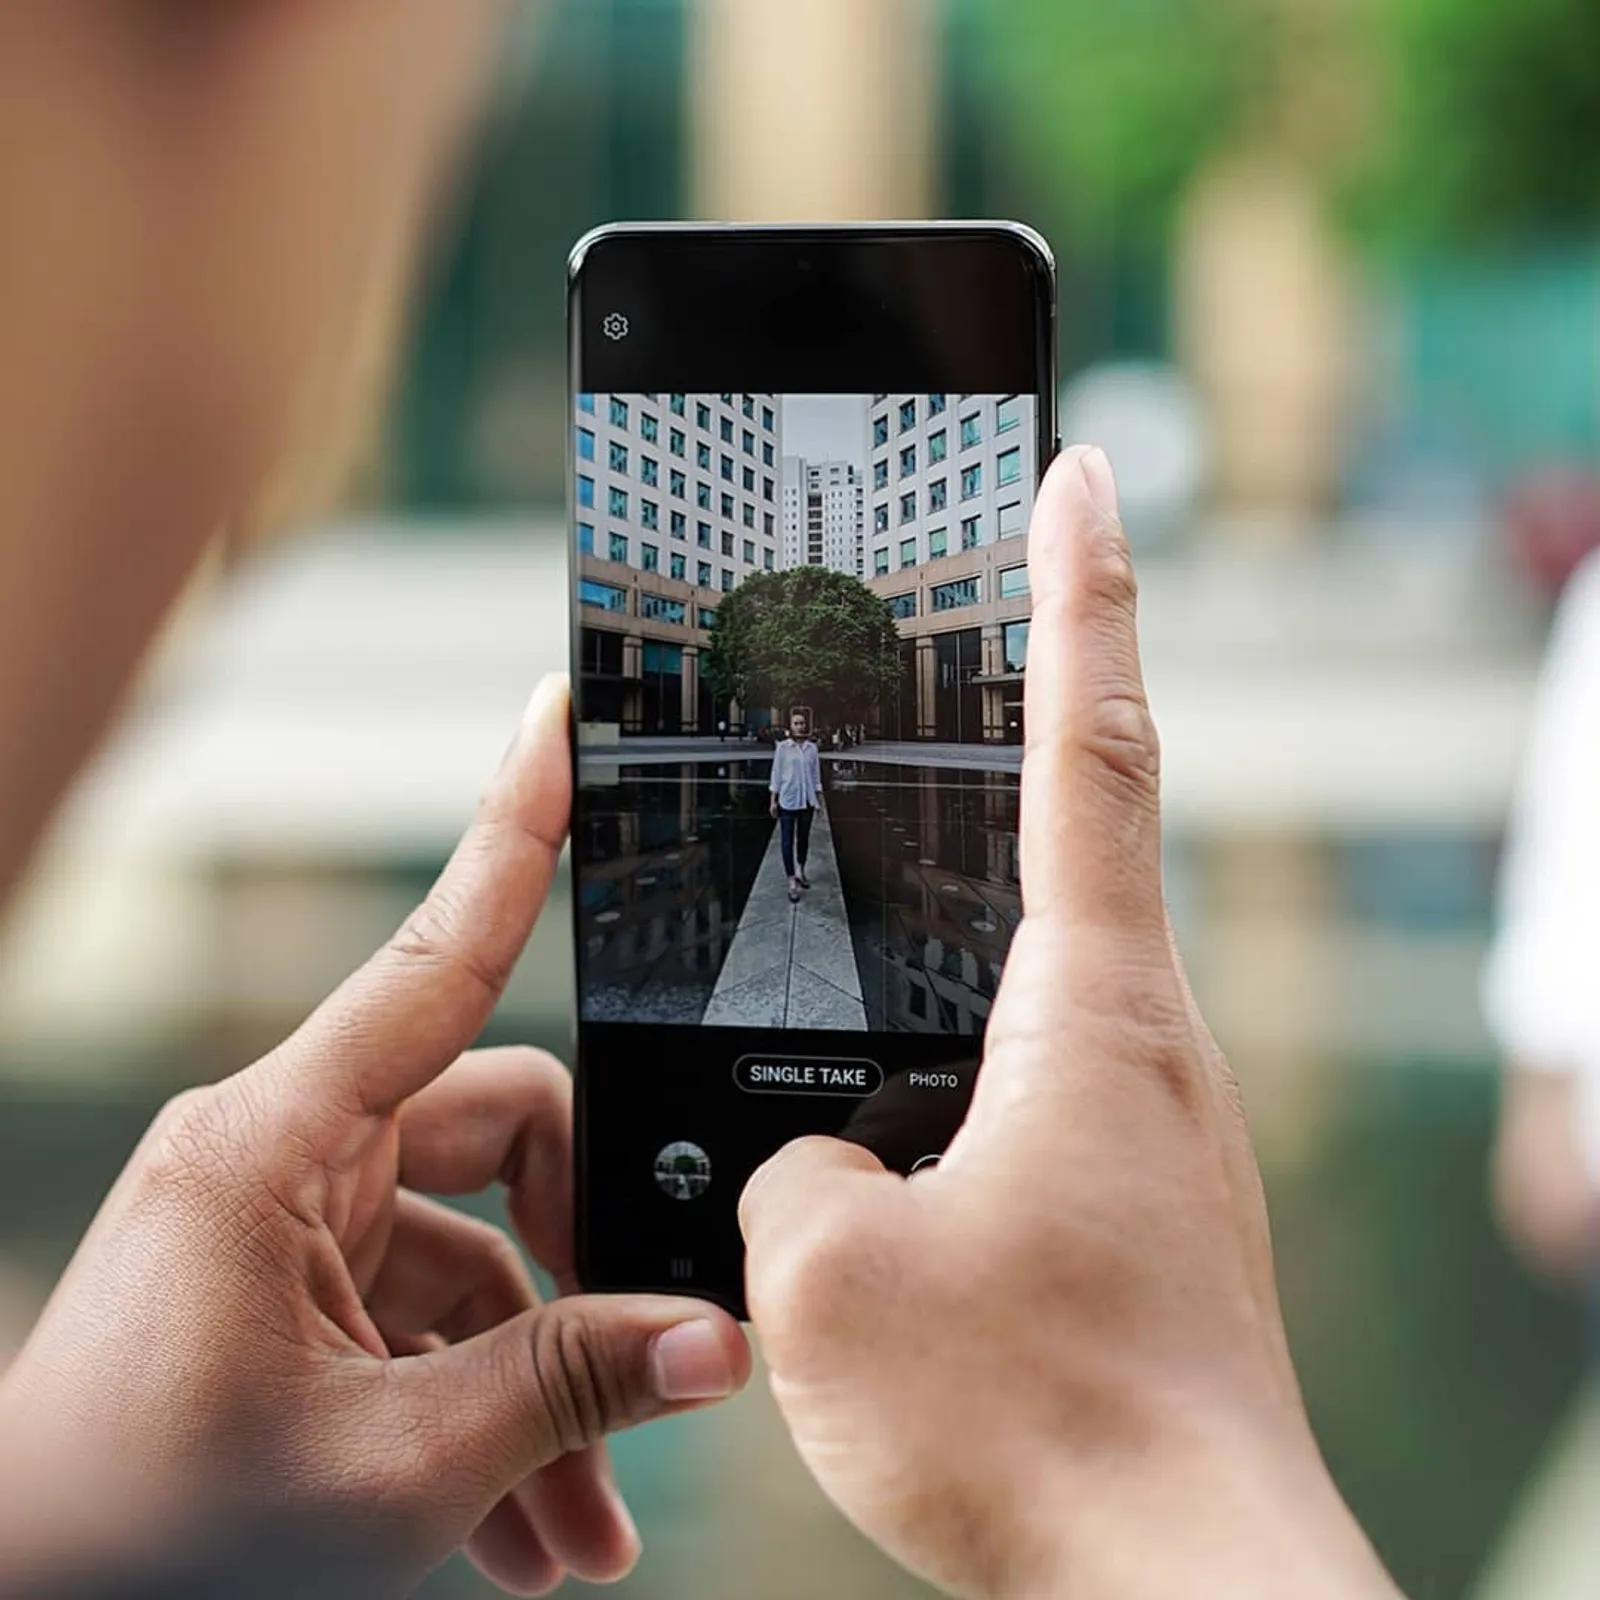 Rilis Seri Baru, Samsung Siap Jadi Pelopor Smartphone Masa Depan